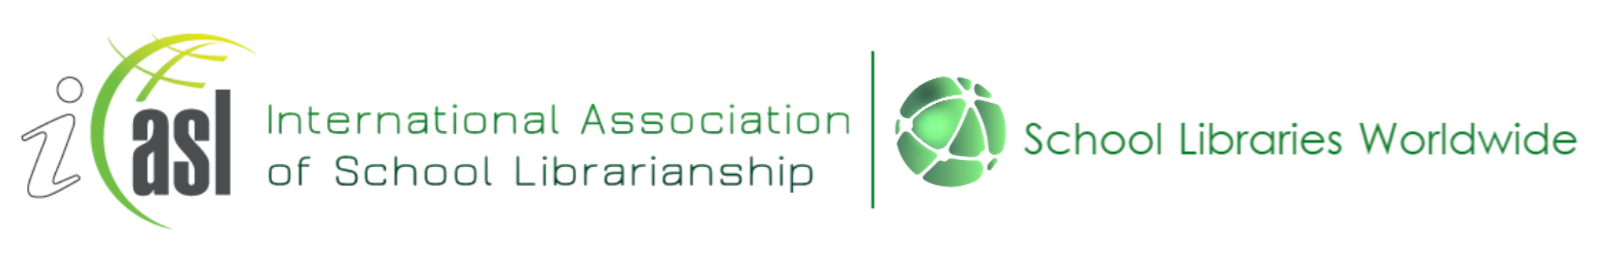 The Internatonal Association of School Librarianship, School Libraries Worldwide